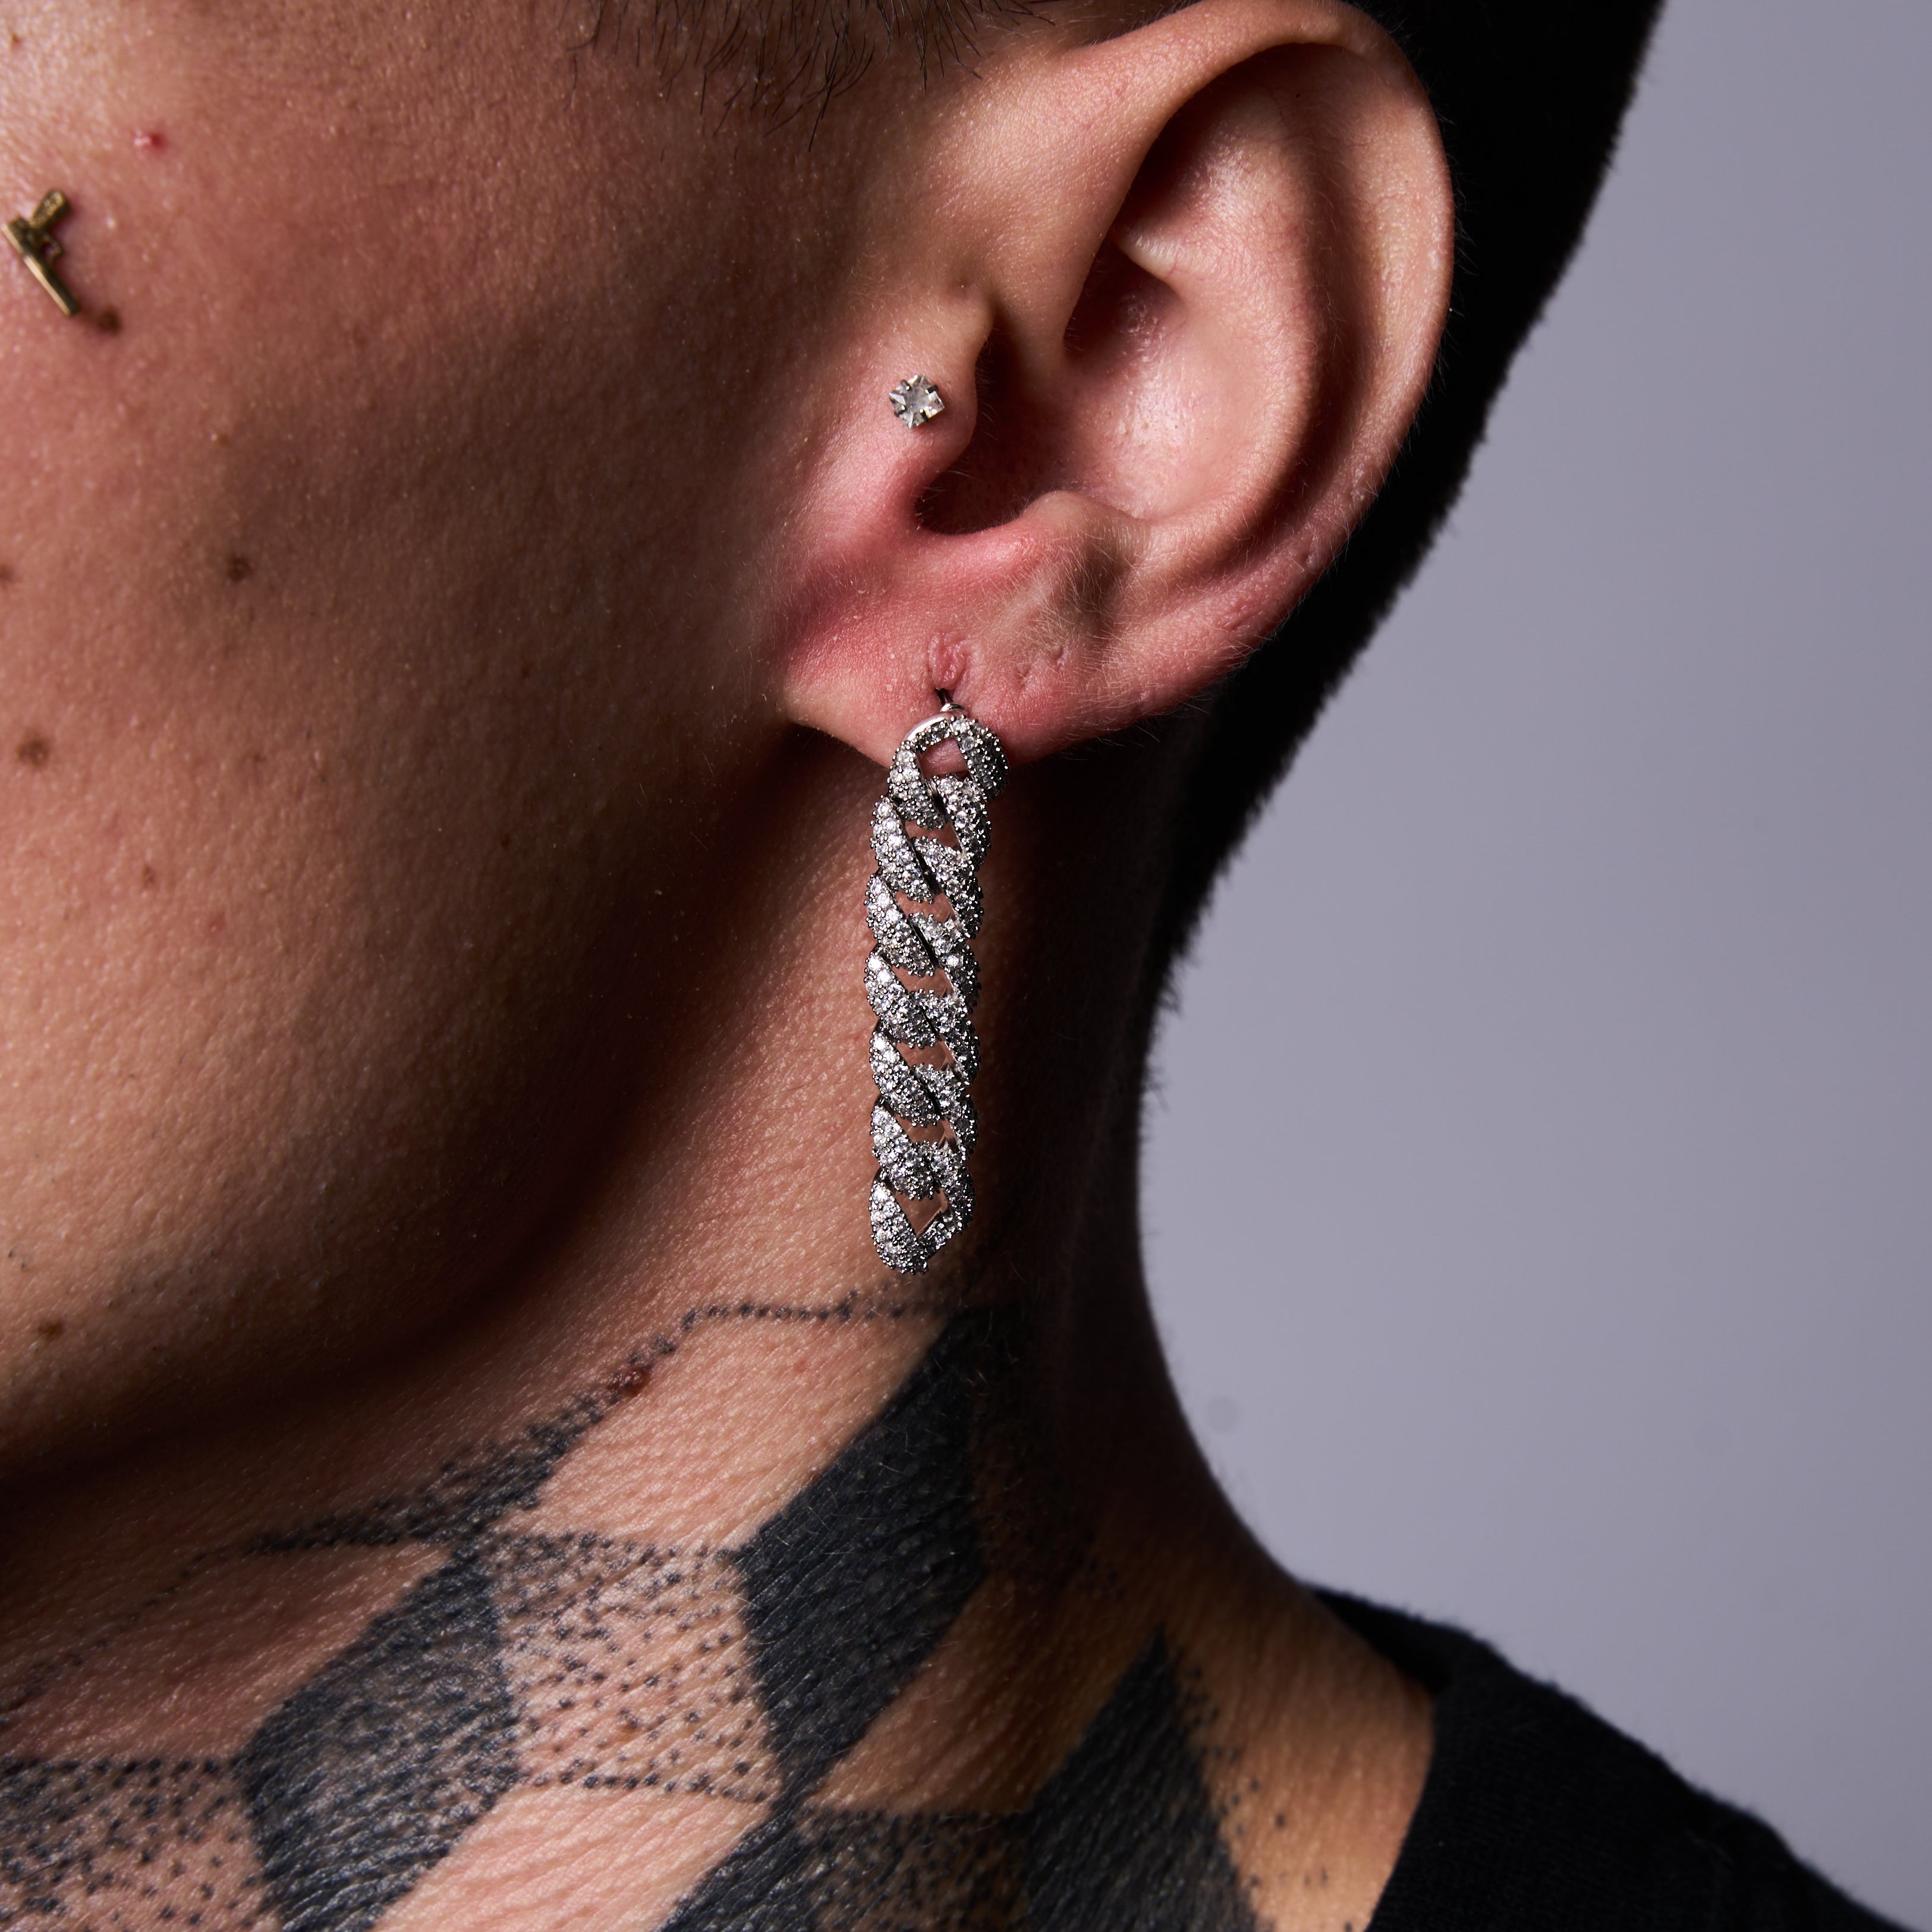 Stainless Steel Earrings For Men Online - Inox Jewelry Tagged 